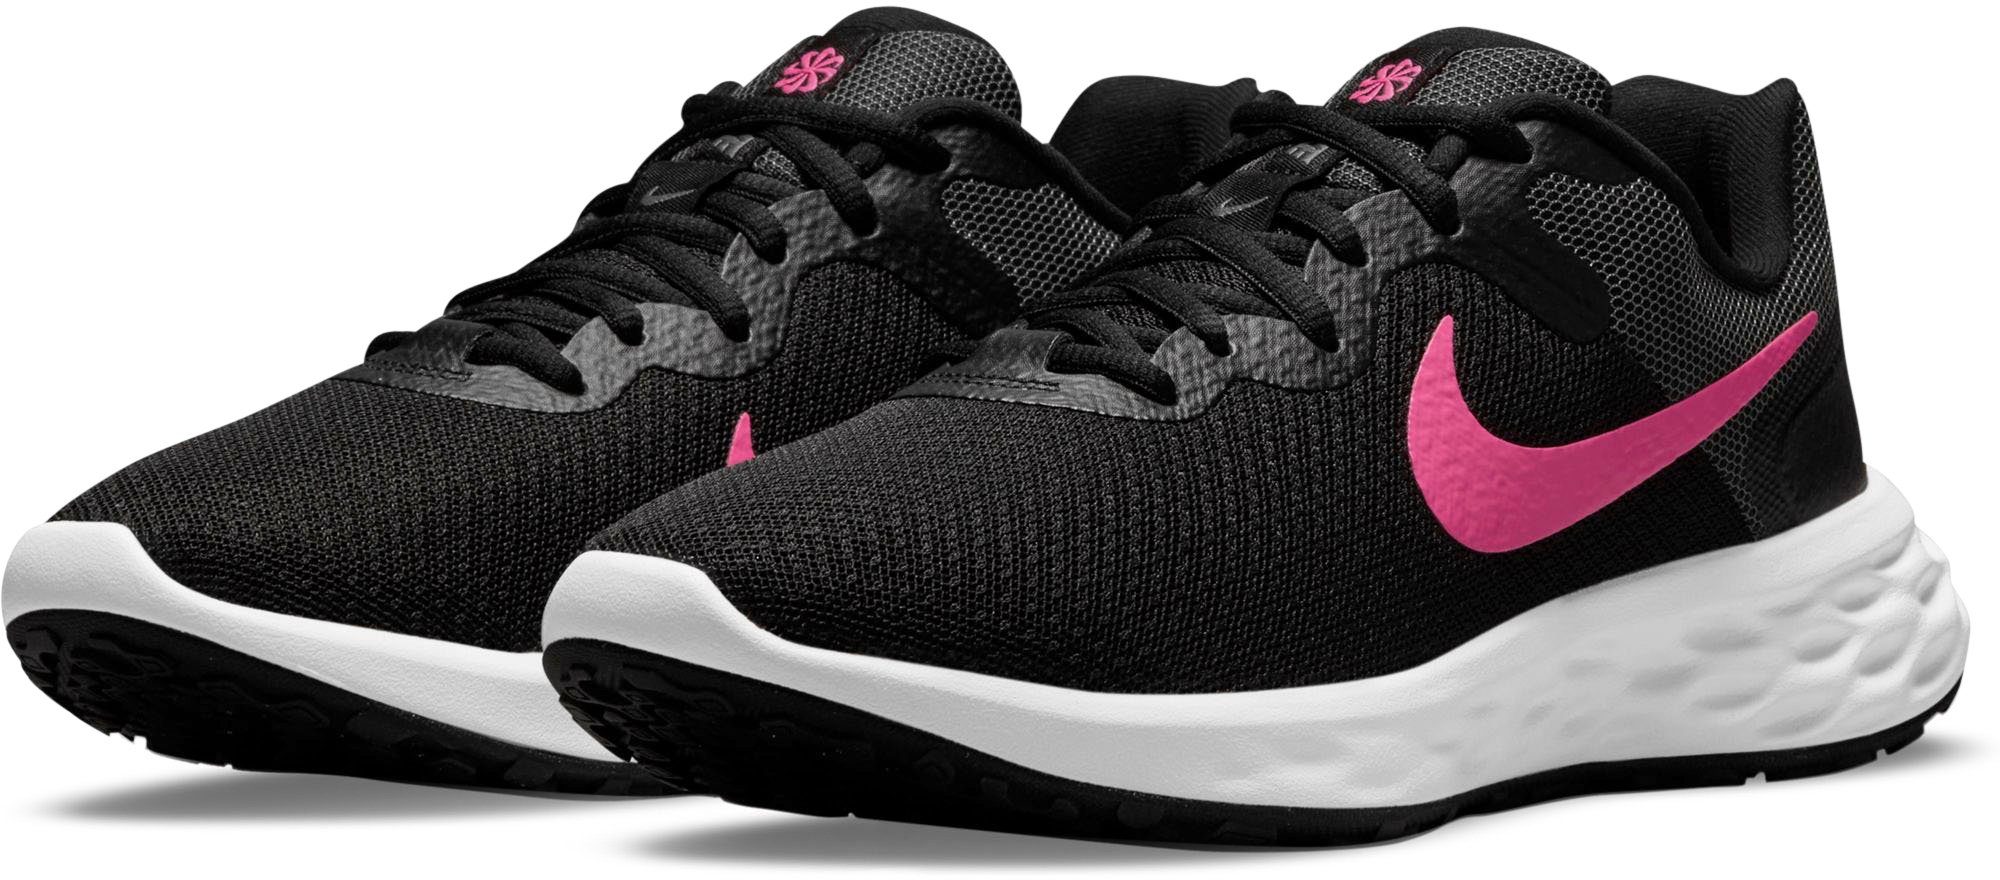 NEXT 6 Nike REVOLUTION NATURE Laufschuh schwarz-neonrot